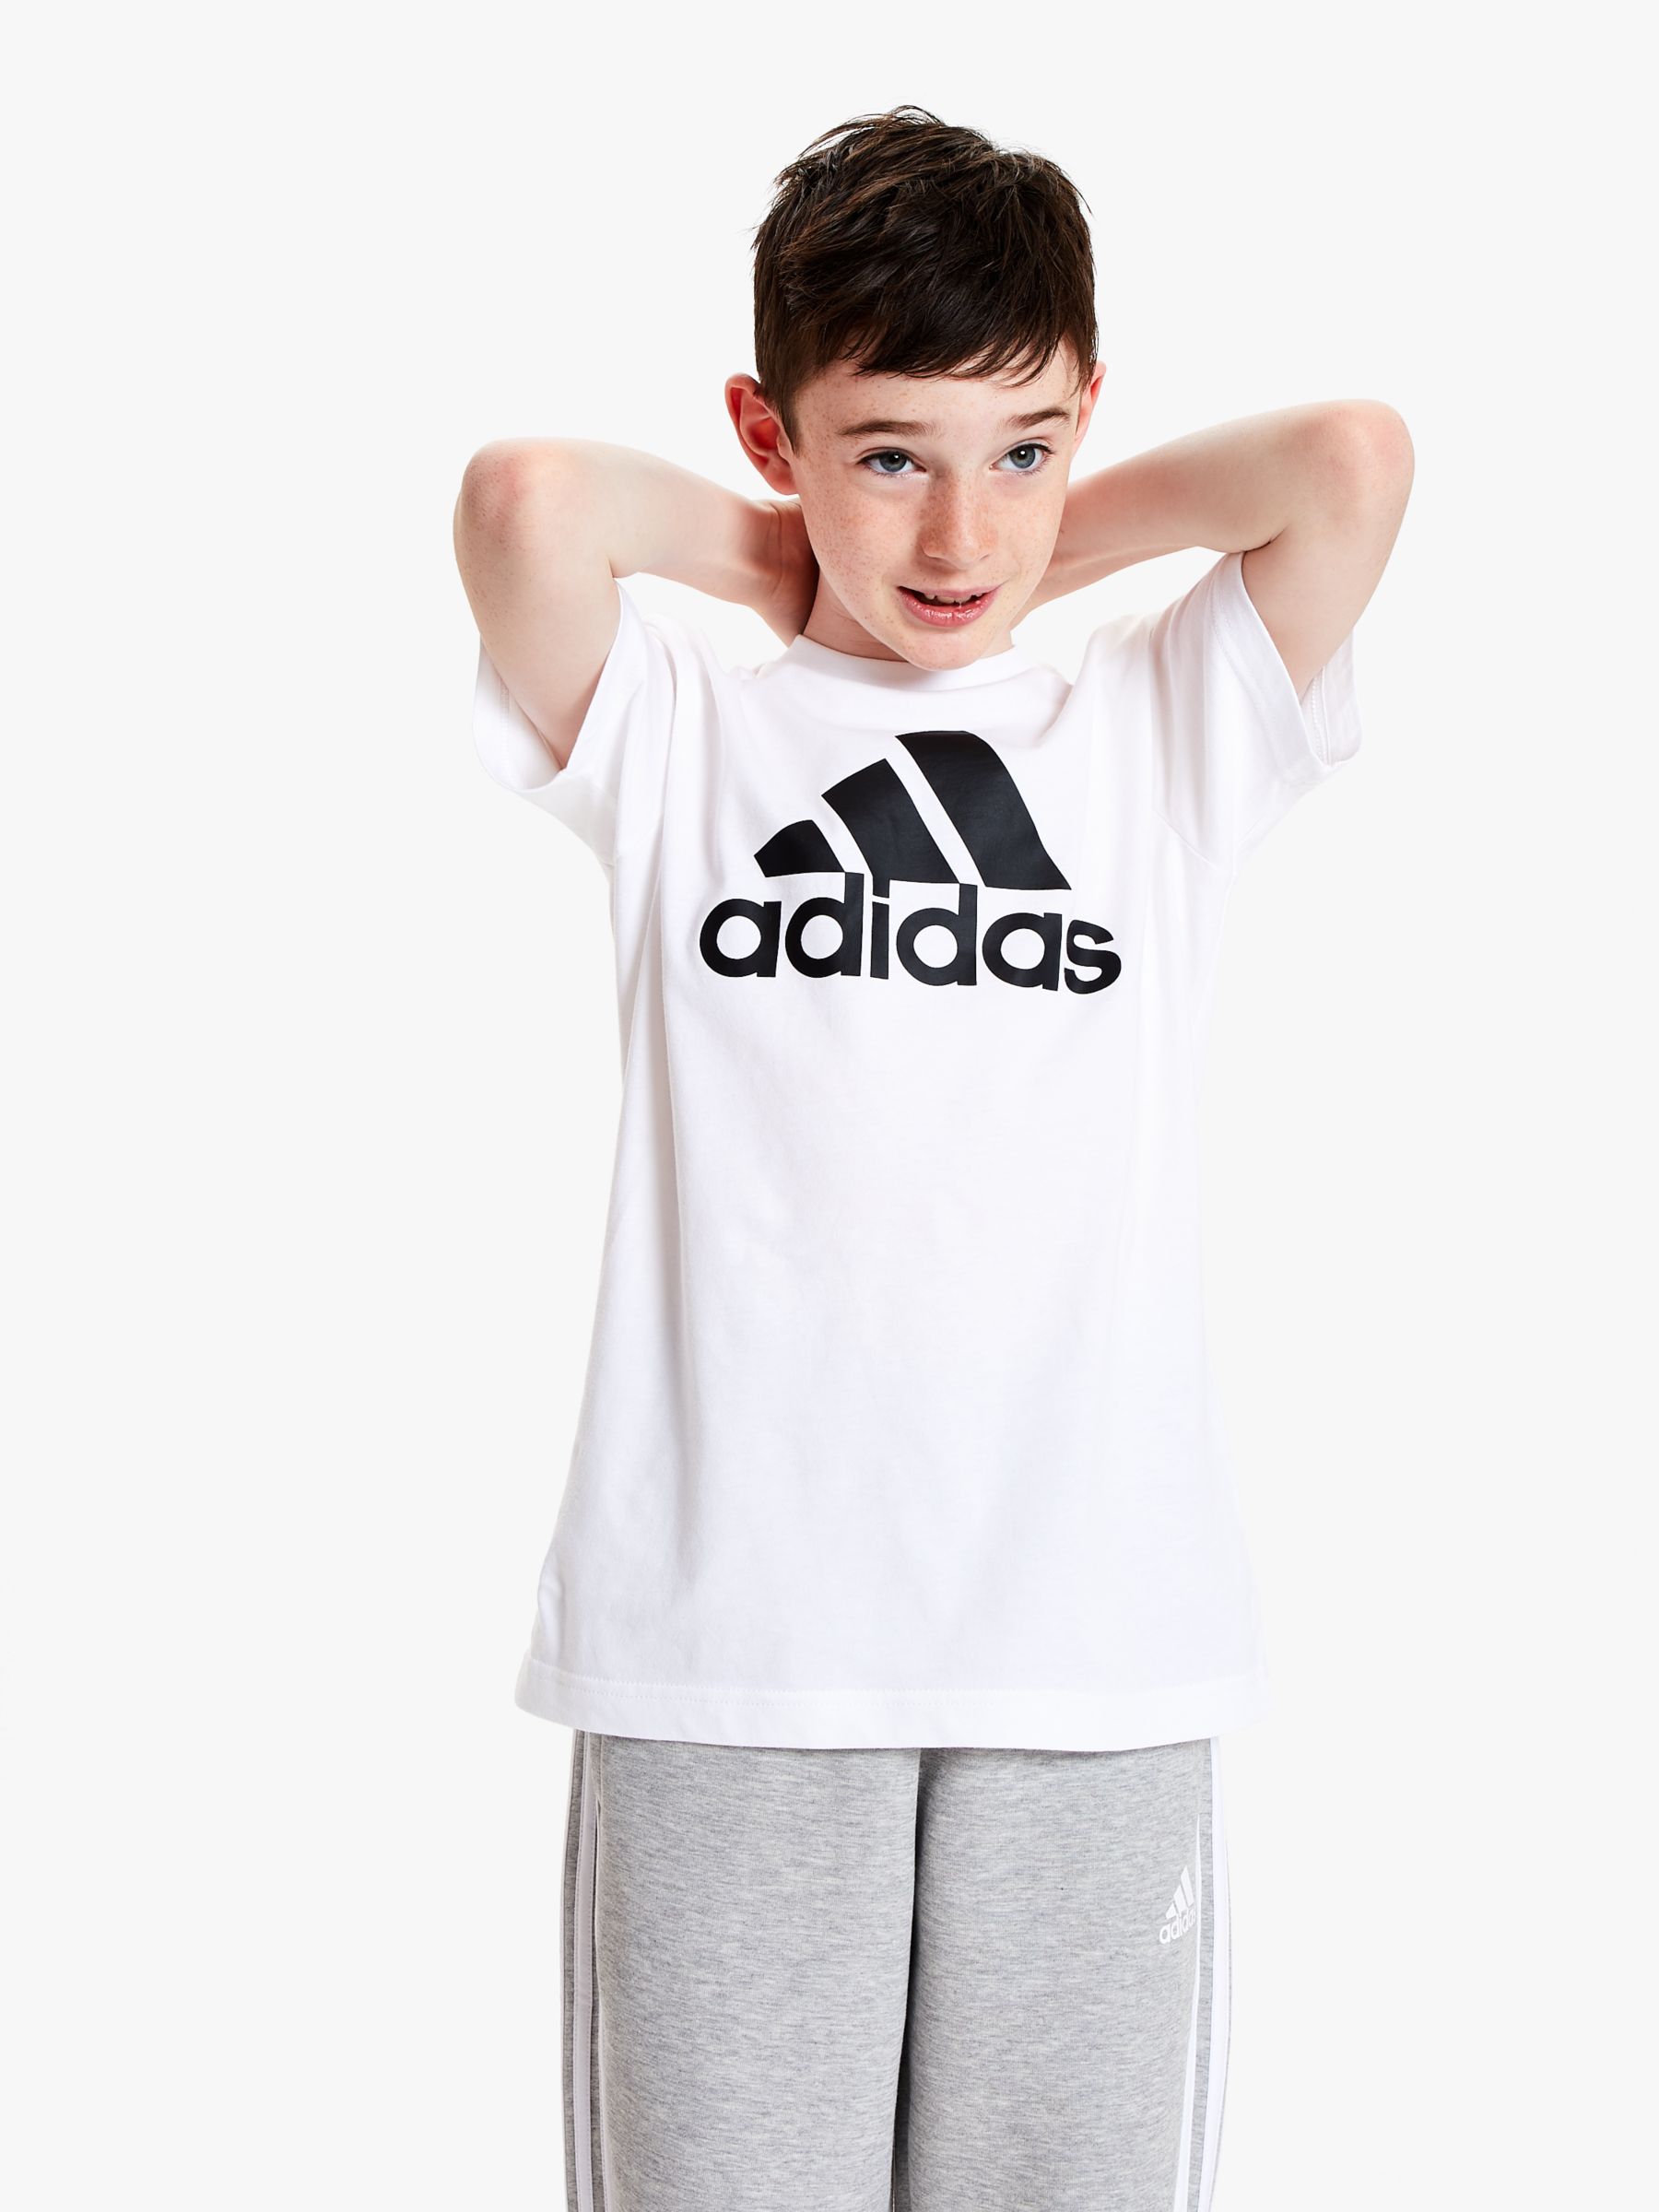 boys adidas shirts